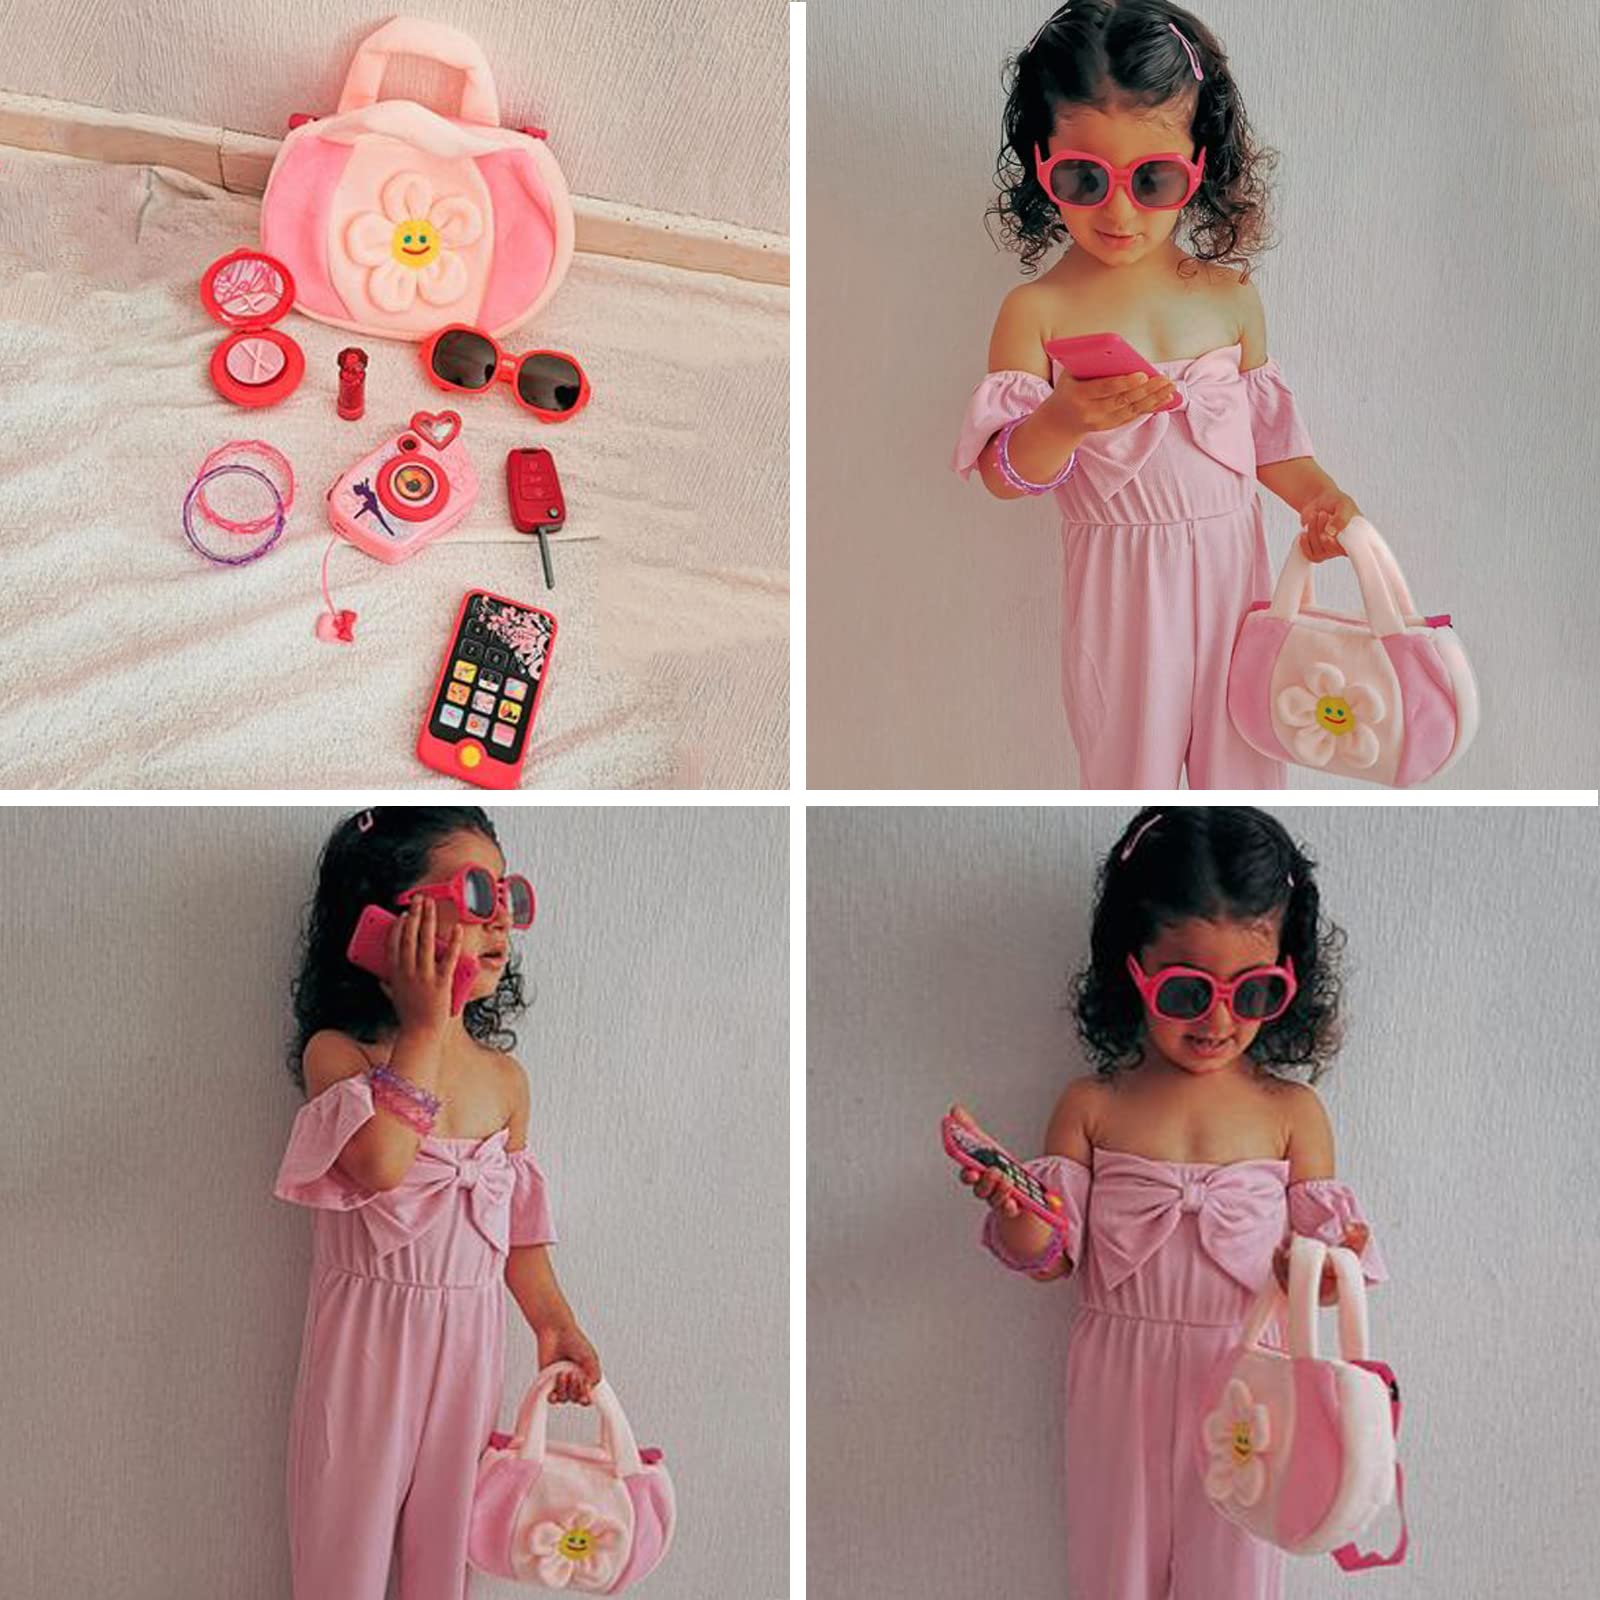 SainSmart Jr. Toddler Purse My First Purse with Pretend Play Set for Princess 9 PCS, Pink